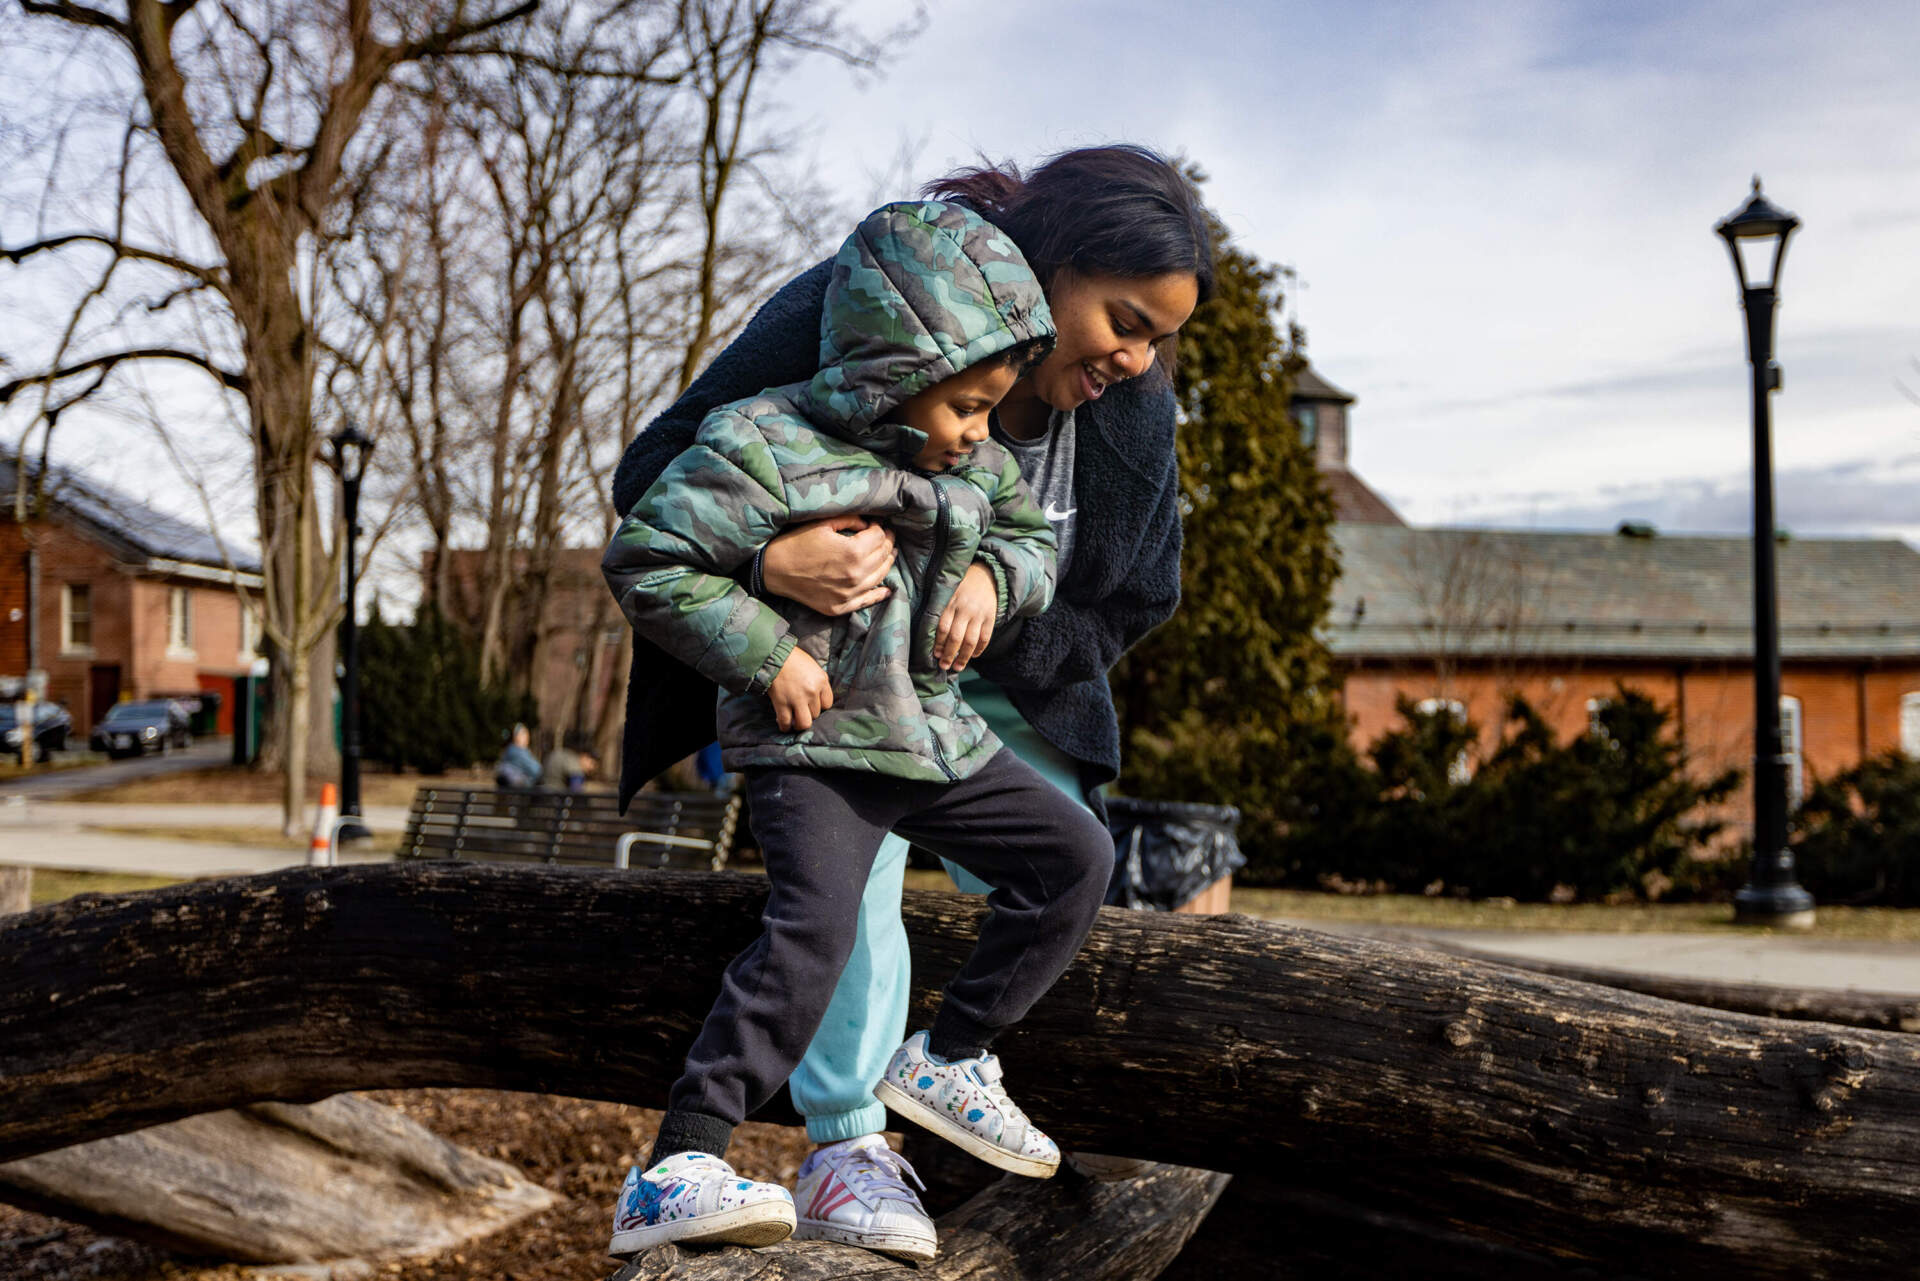 Graciella Carter and her son Oscar climb on logs at a Northampton park. (Jesse Costa/WBUR)